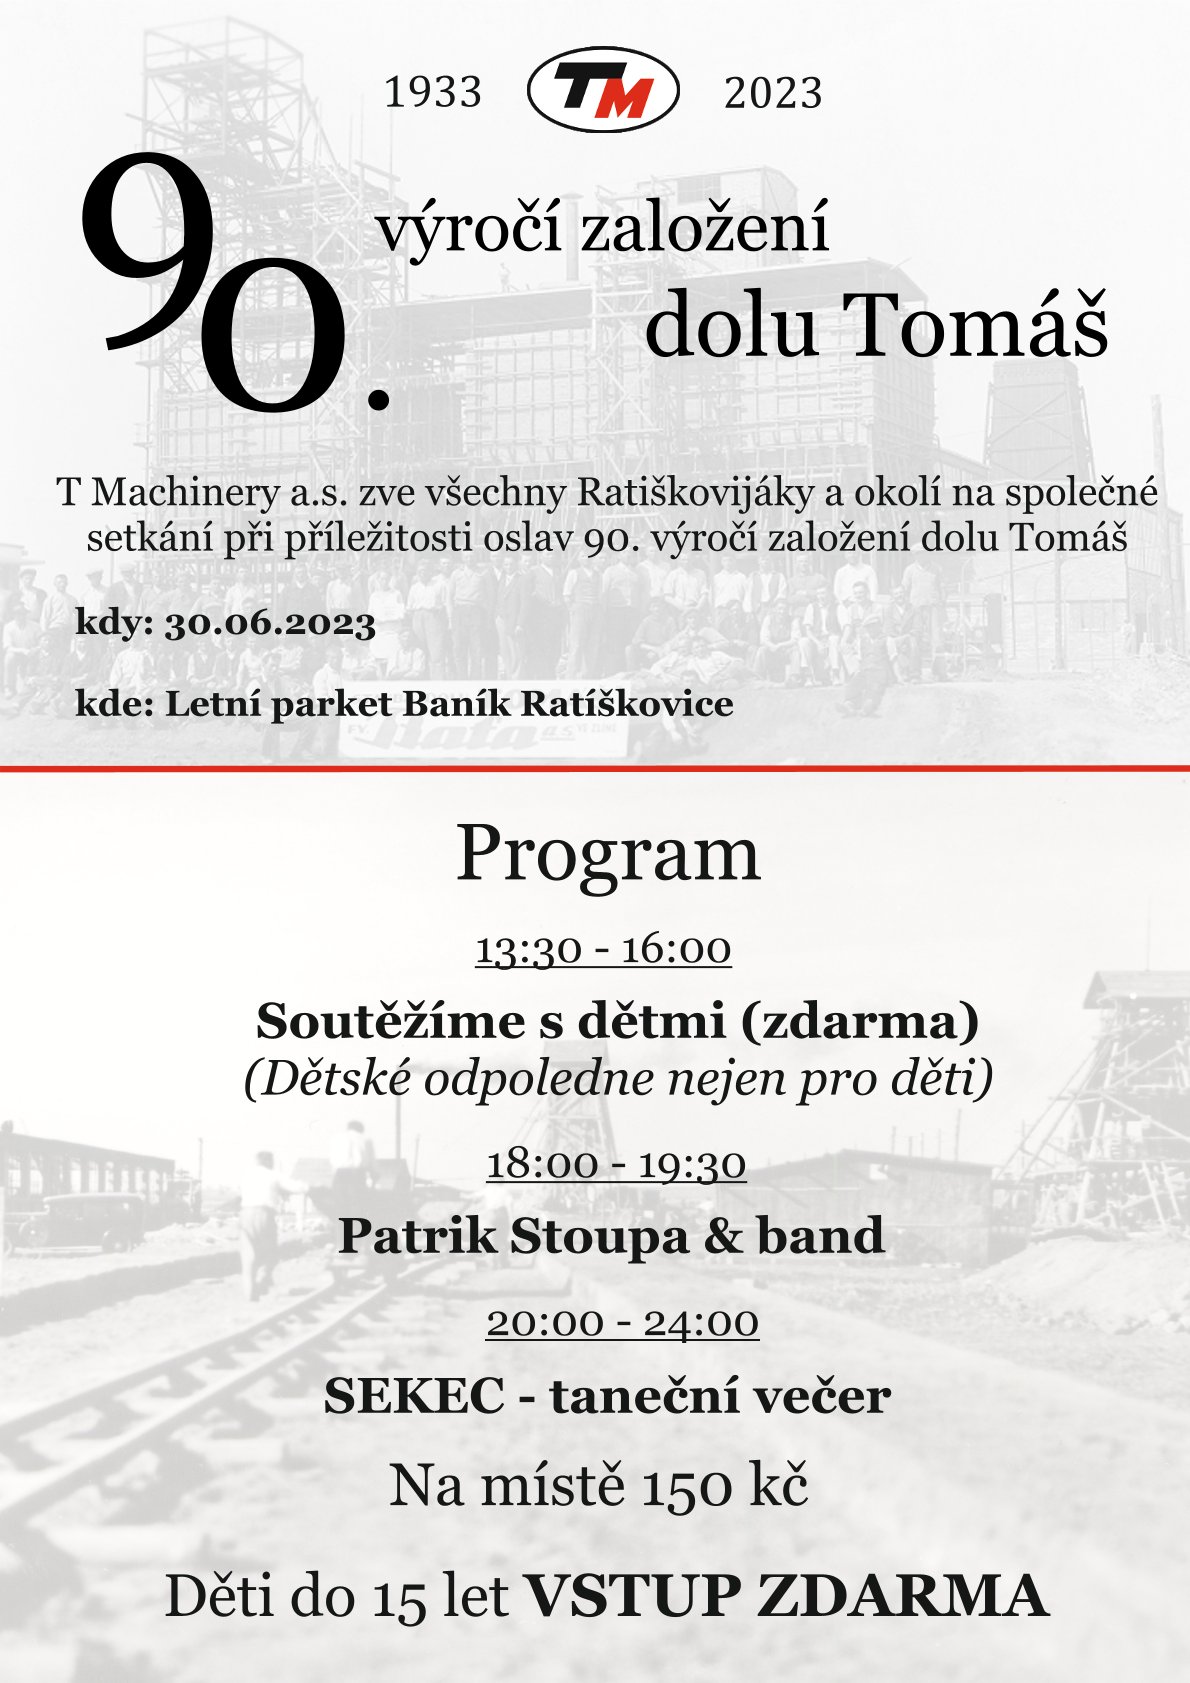 CELEBRATION OF THE 90TH ANNIVERSARY OF THE TOMÁŠ MINE